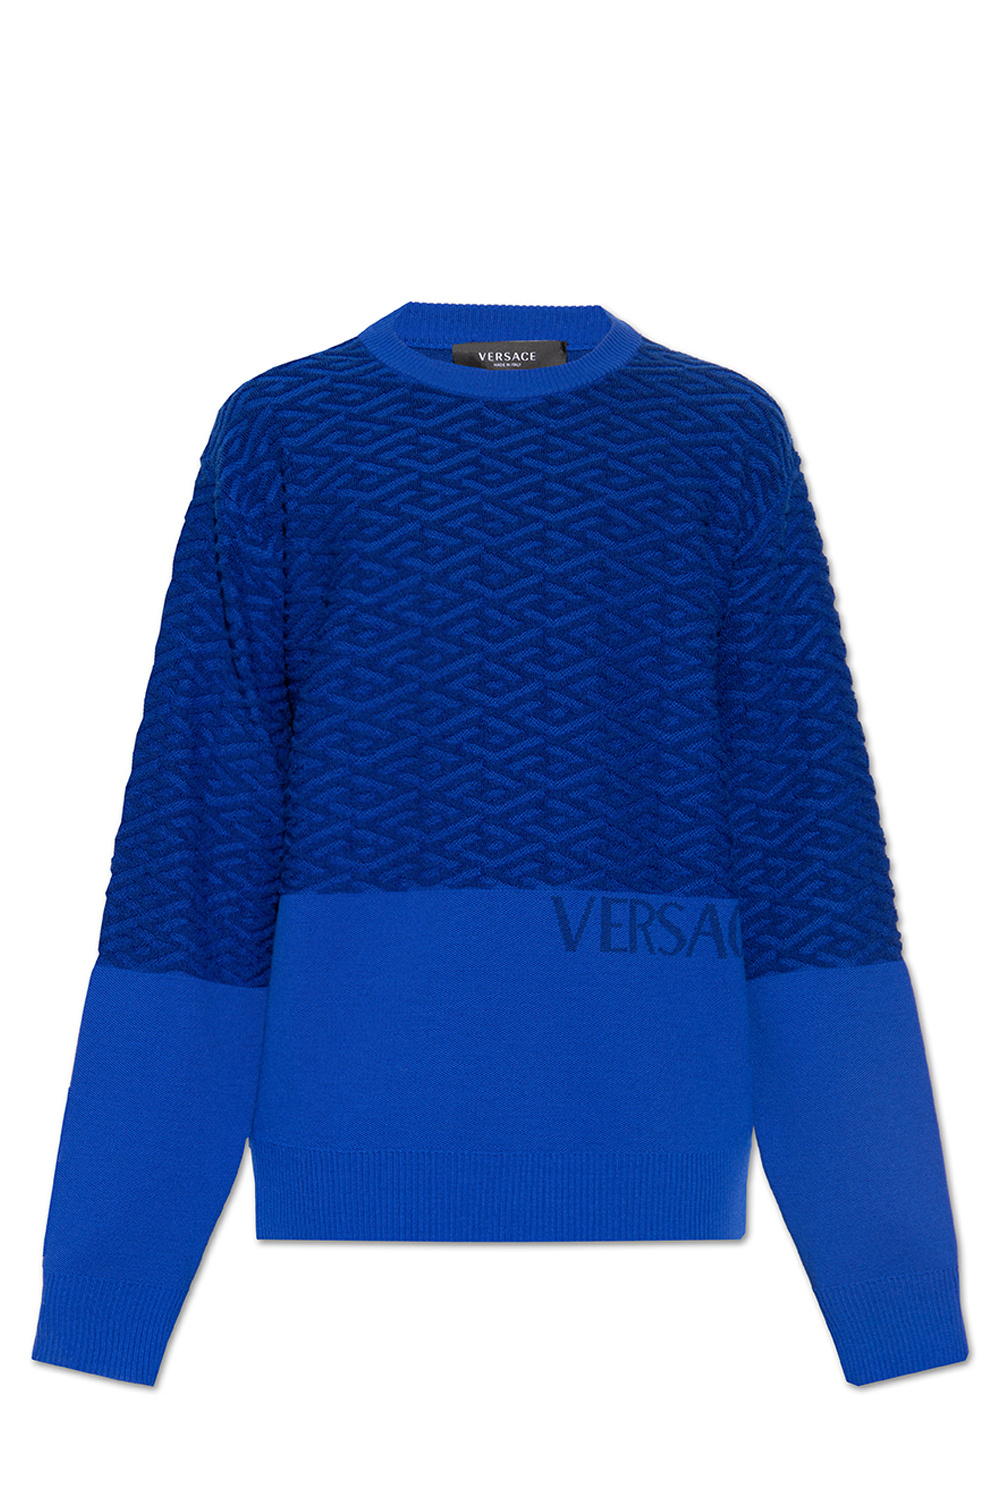 Versace Wool Bulls sweater